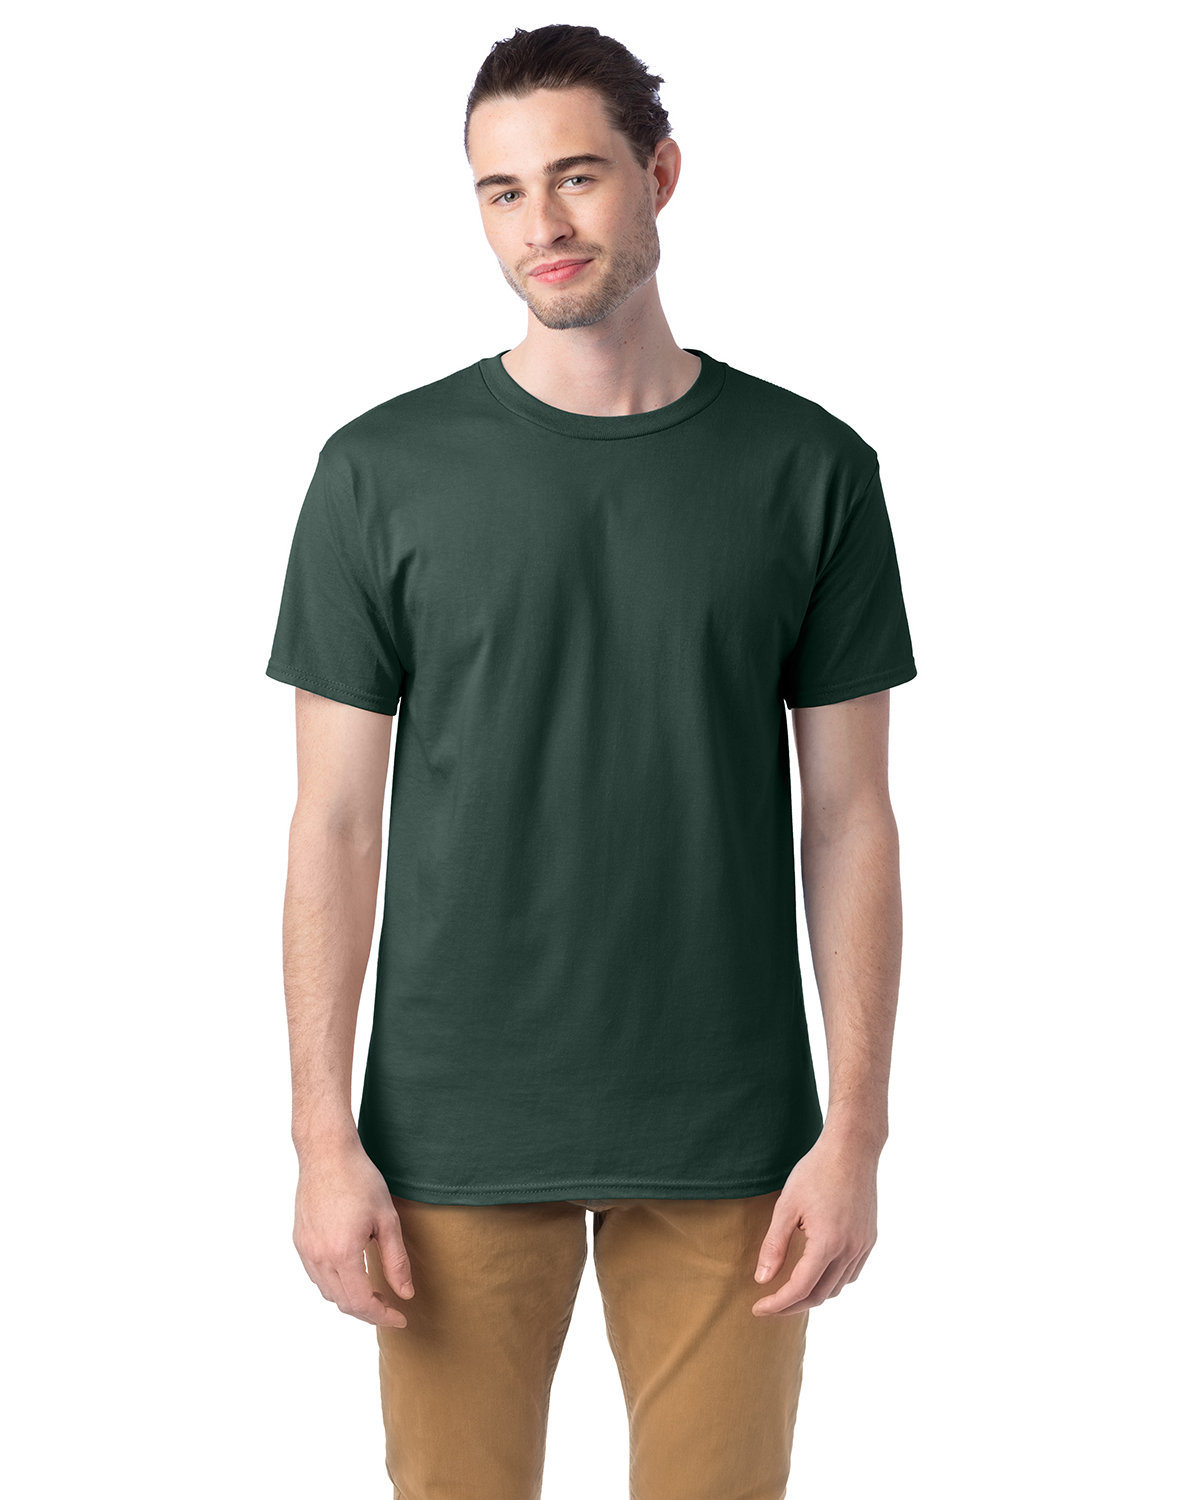 Hanes Adult Essential Short Sleeve T-Shirt athletic dk gren 